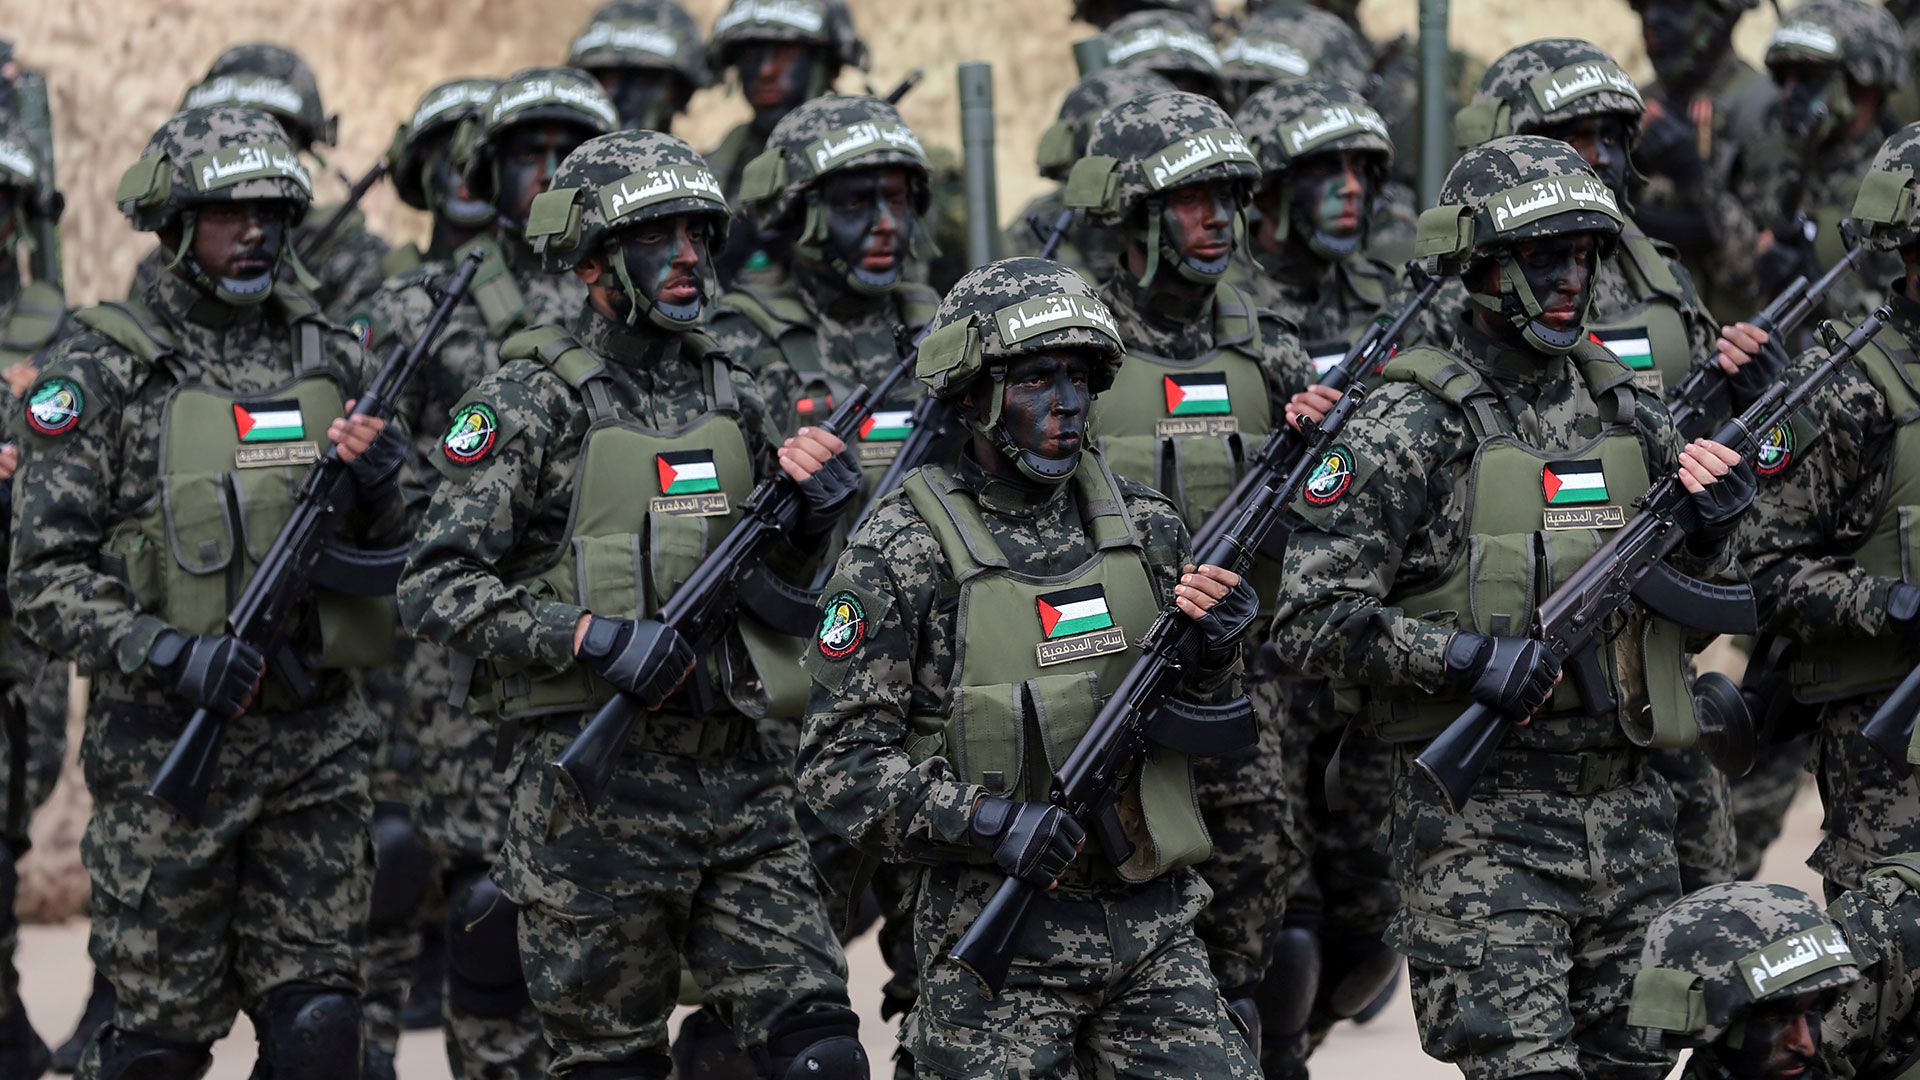 Miembros del grupo terrorista Hamas. (REUTERS/Ibraheem Abu Mustafa)